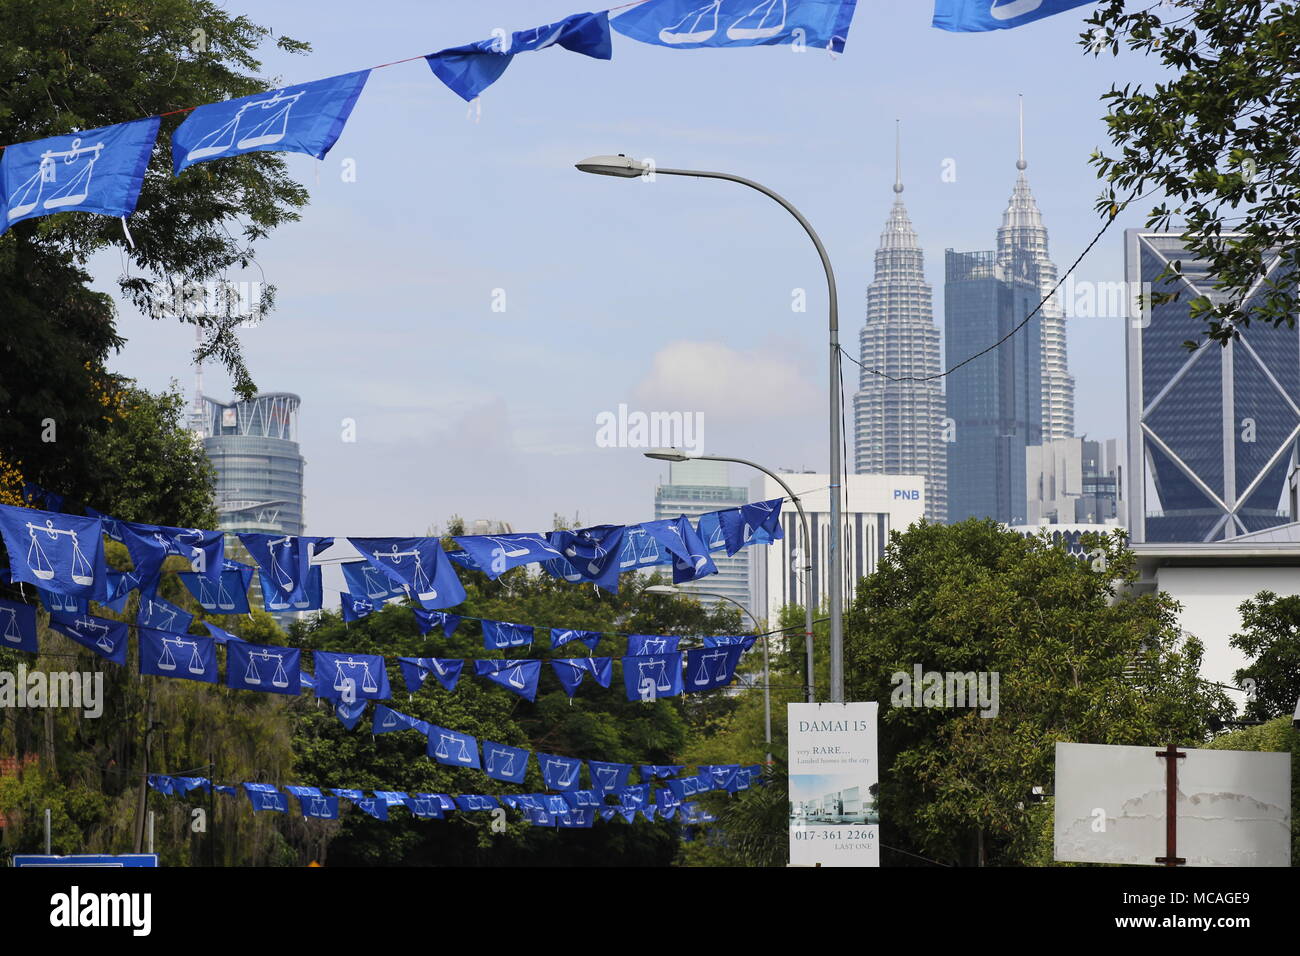 Malaysische allgemeinen Wahlen 2018 Wahlkampf in Kuala Lumpur, Malaysia. Nationale Koalitionspartei flags in Blau. Stockfoto